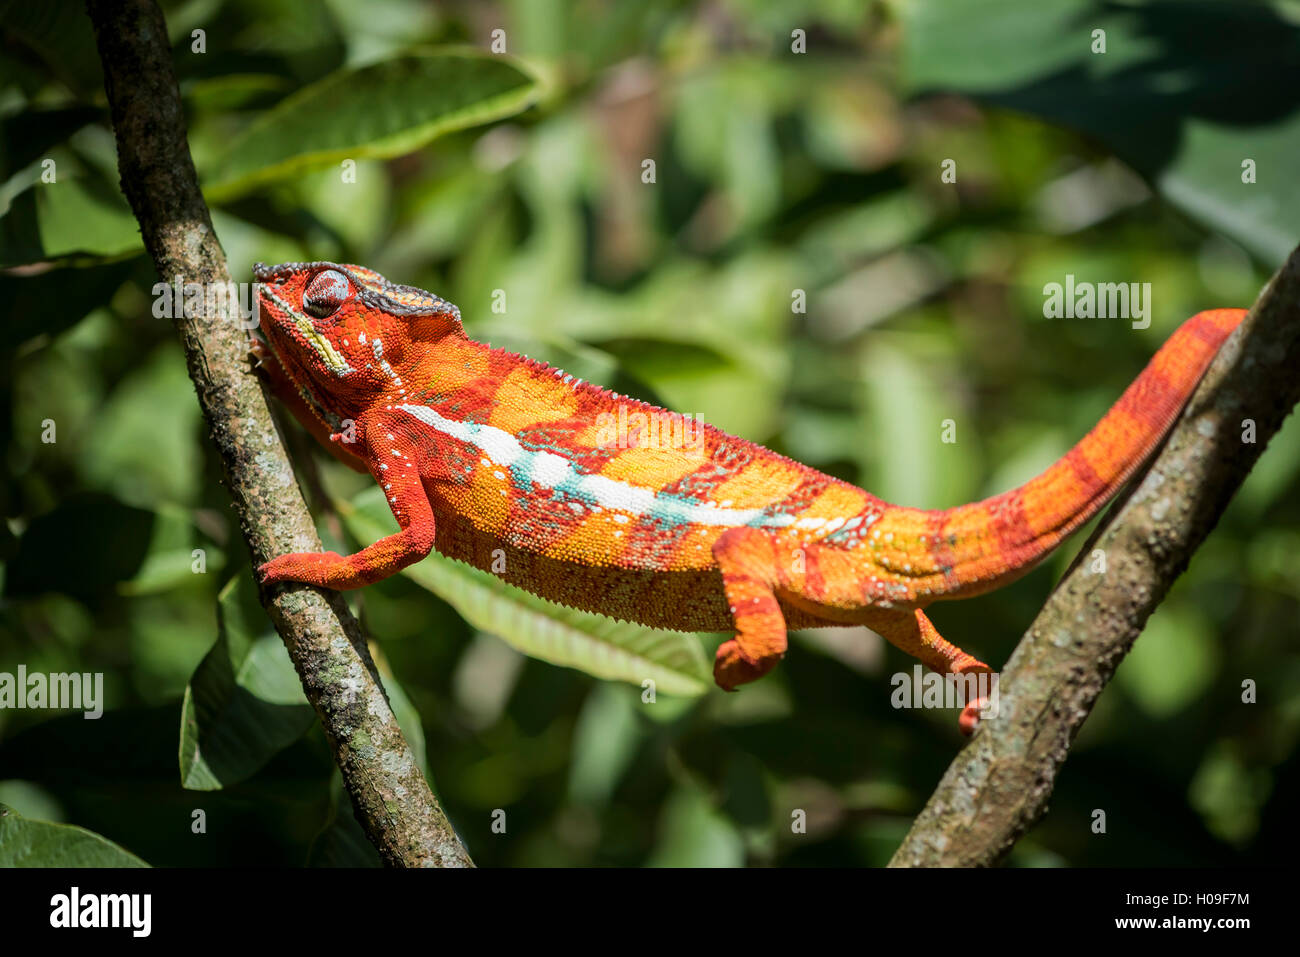 Red panther chameleon (Furcifer pardalis), endemic to Madagascar, Africa Stock Photo